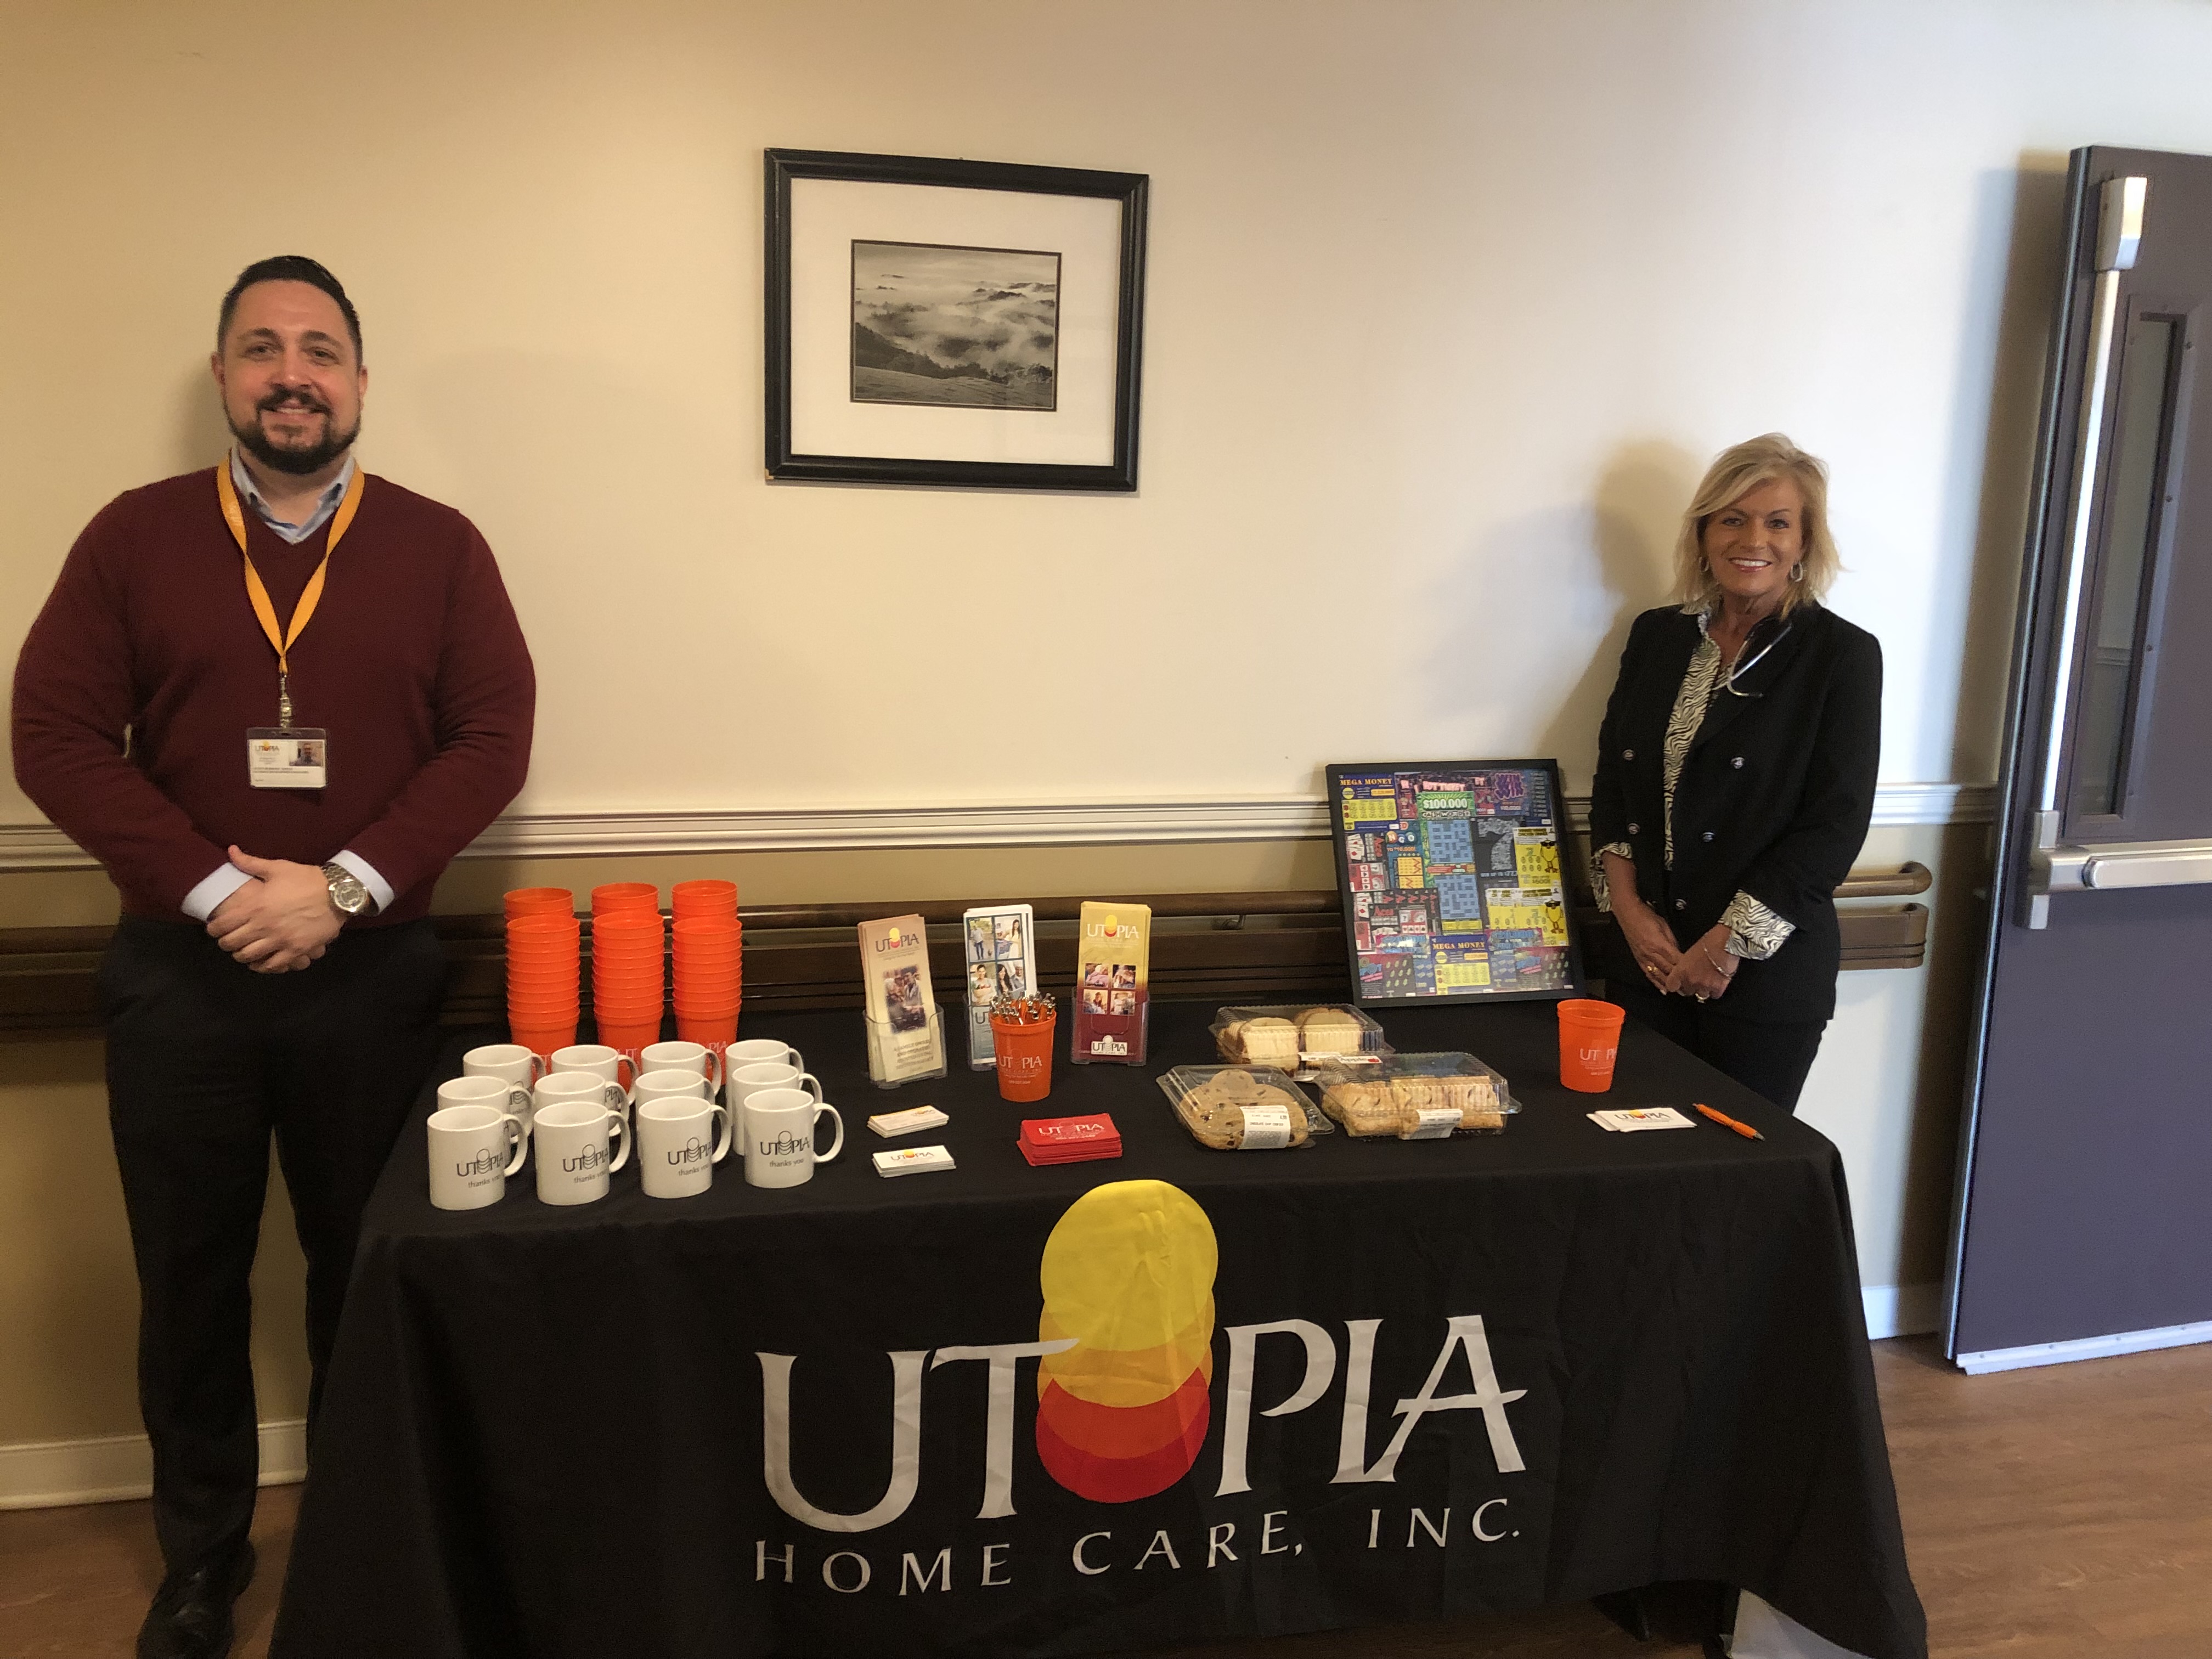 Utopia Home Care, Inc. - Utopia Home Care